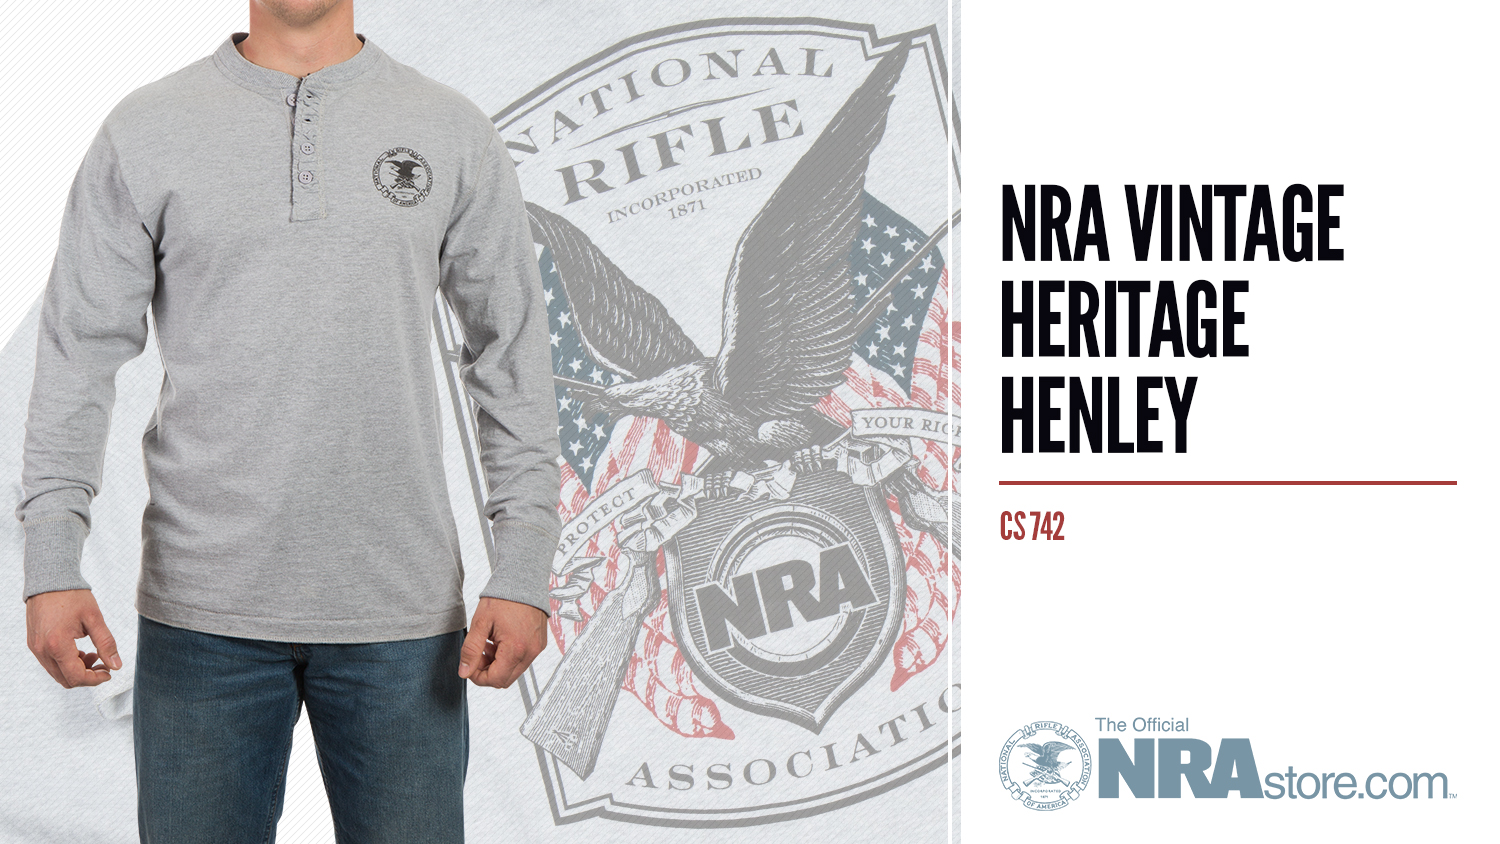 NRAstore Product Highlight: NRA Vintage Heritage Henley